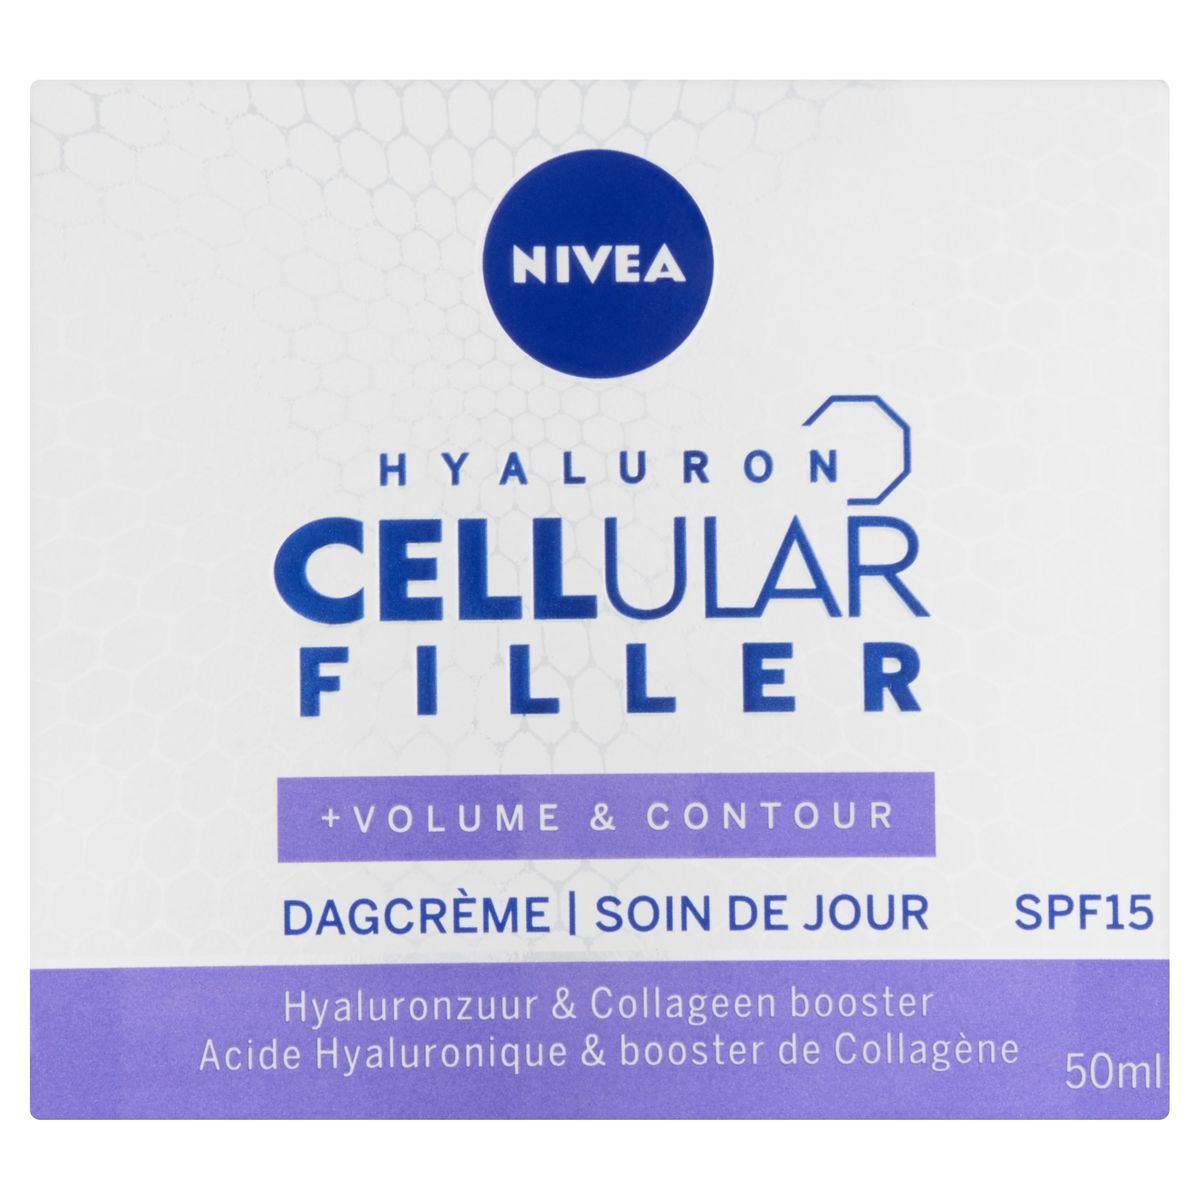 Nivea Hyaluron Cellular Filler + Volume & Contour Soin Jour SPF15 50ml